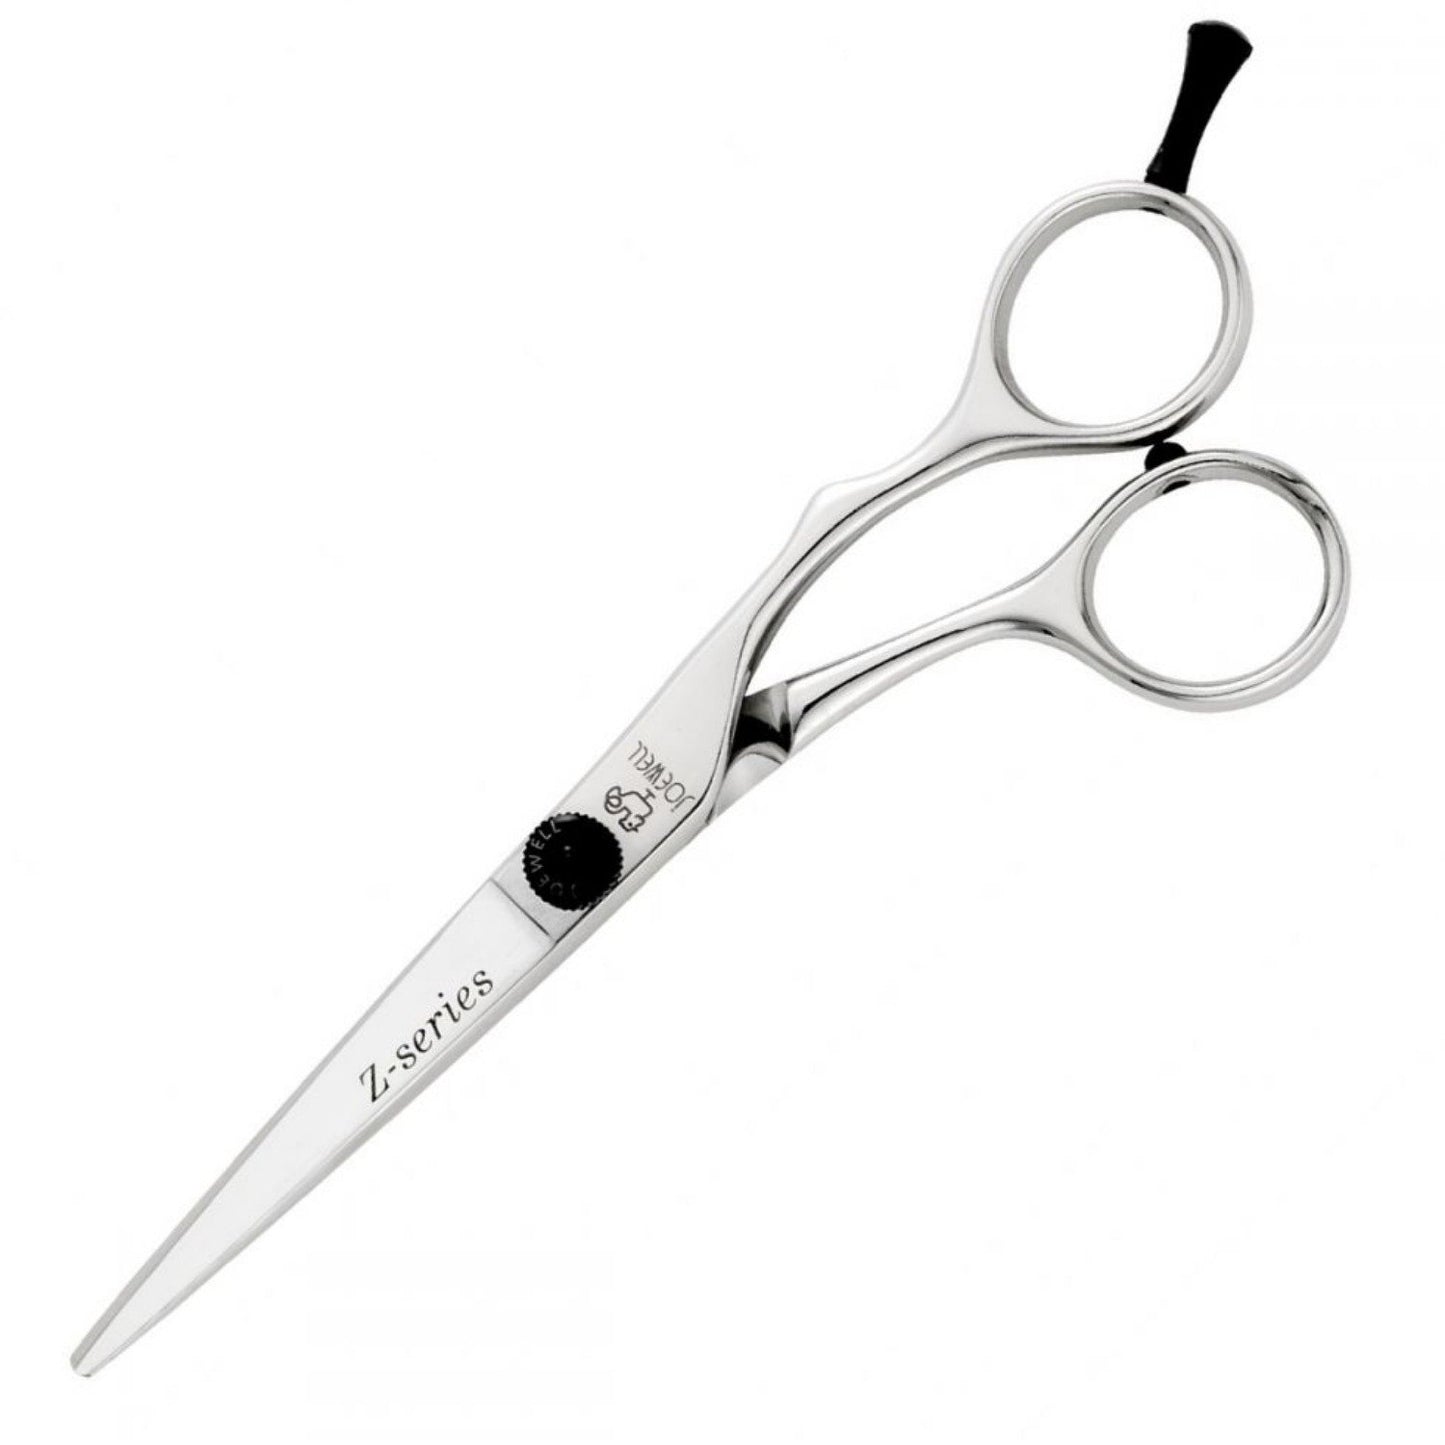 Joewell Z Series Hairdressing Scissors 6 Inch (SHOP)